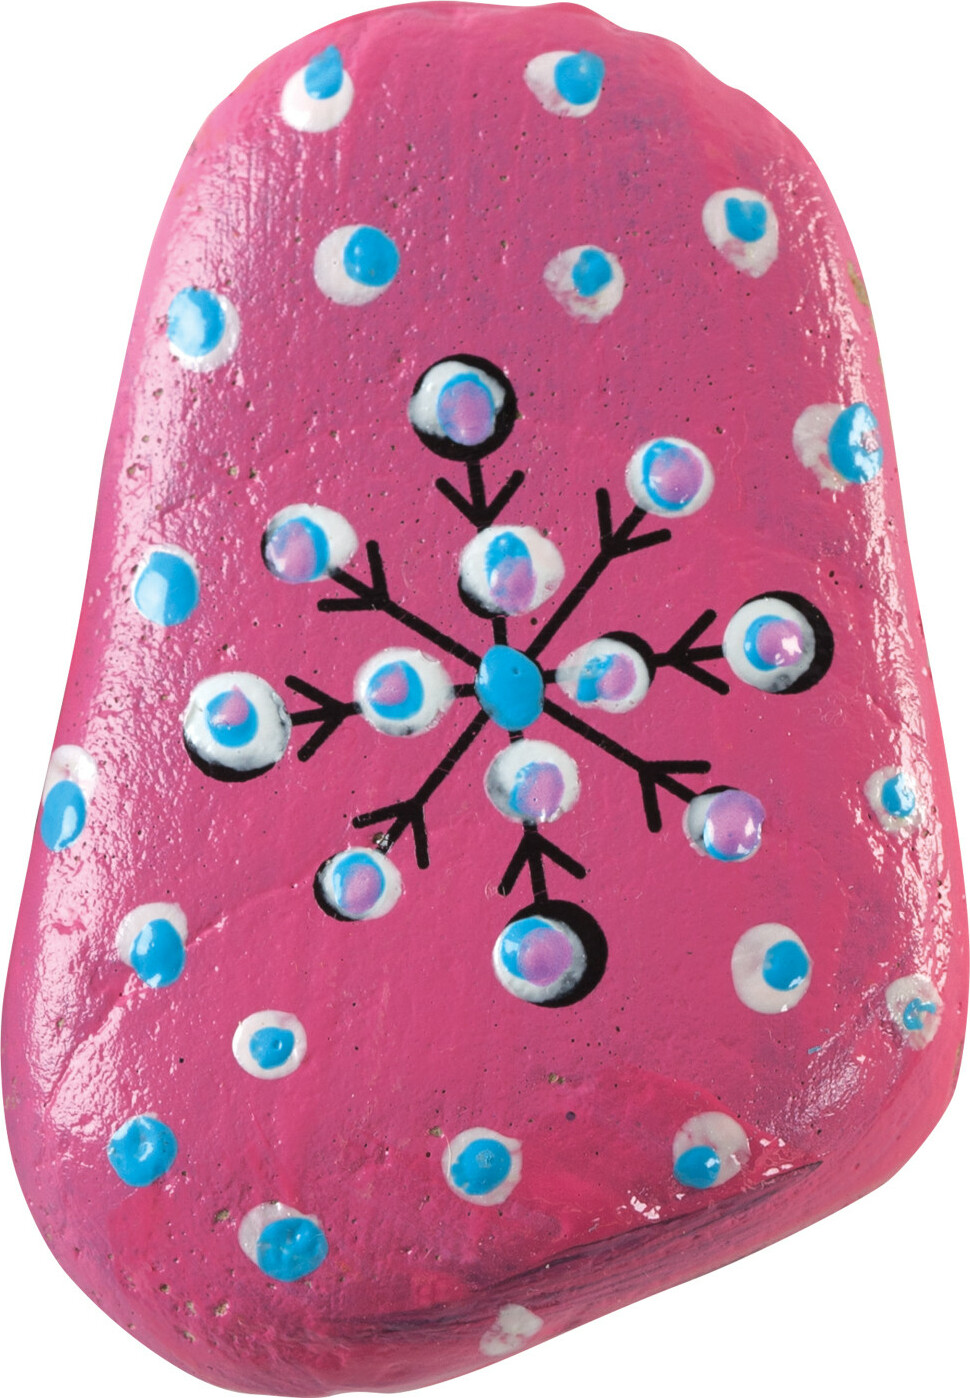 Creativity for Kids Hide & Seek Dot-a-Rock Painting Kit